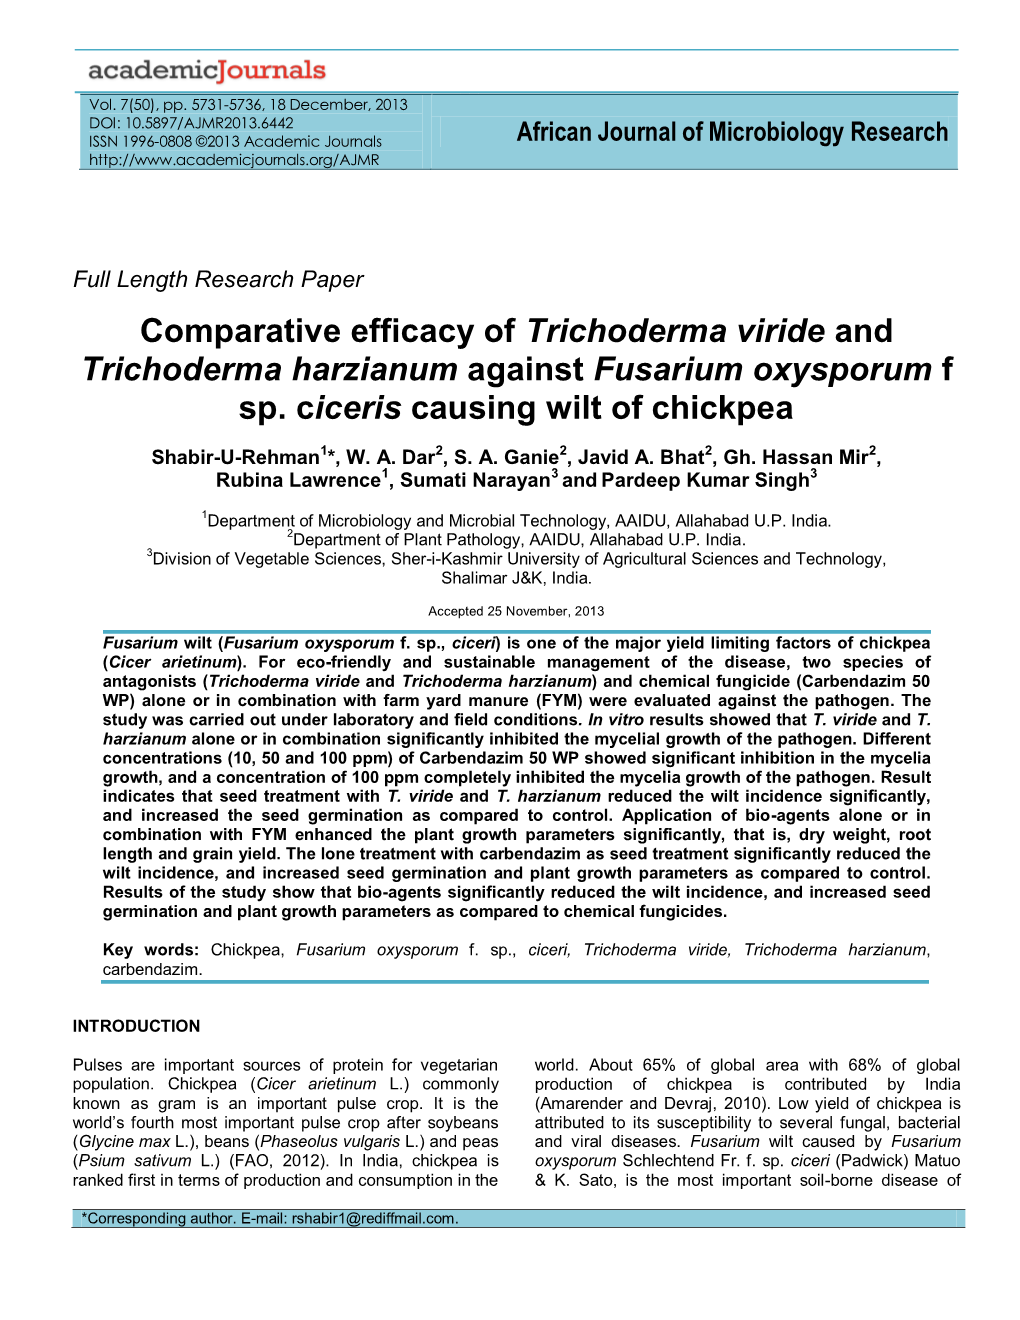 Comparative Efficacy of Trichoderma Viride and Trichoderma Harzianum Against Fusarium Oxysporum F Sp